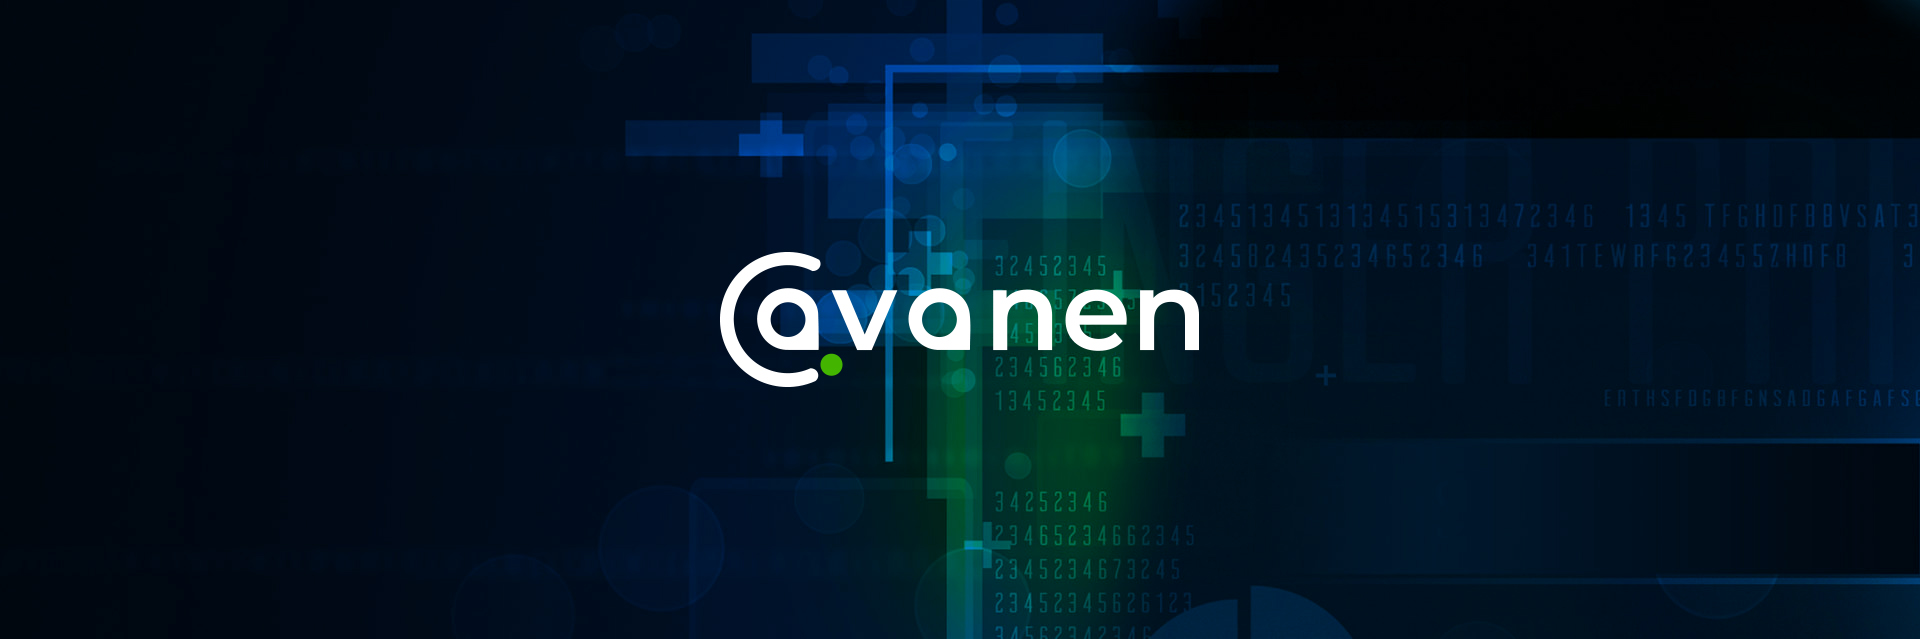 Avanen_logo